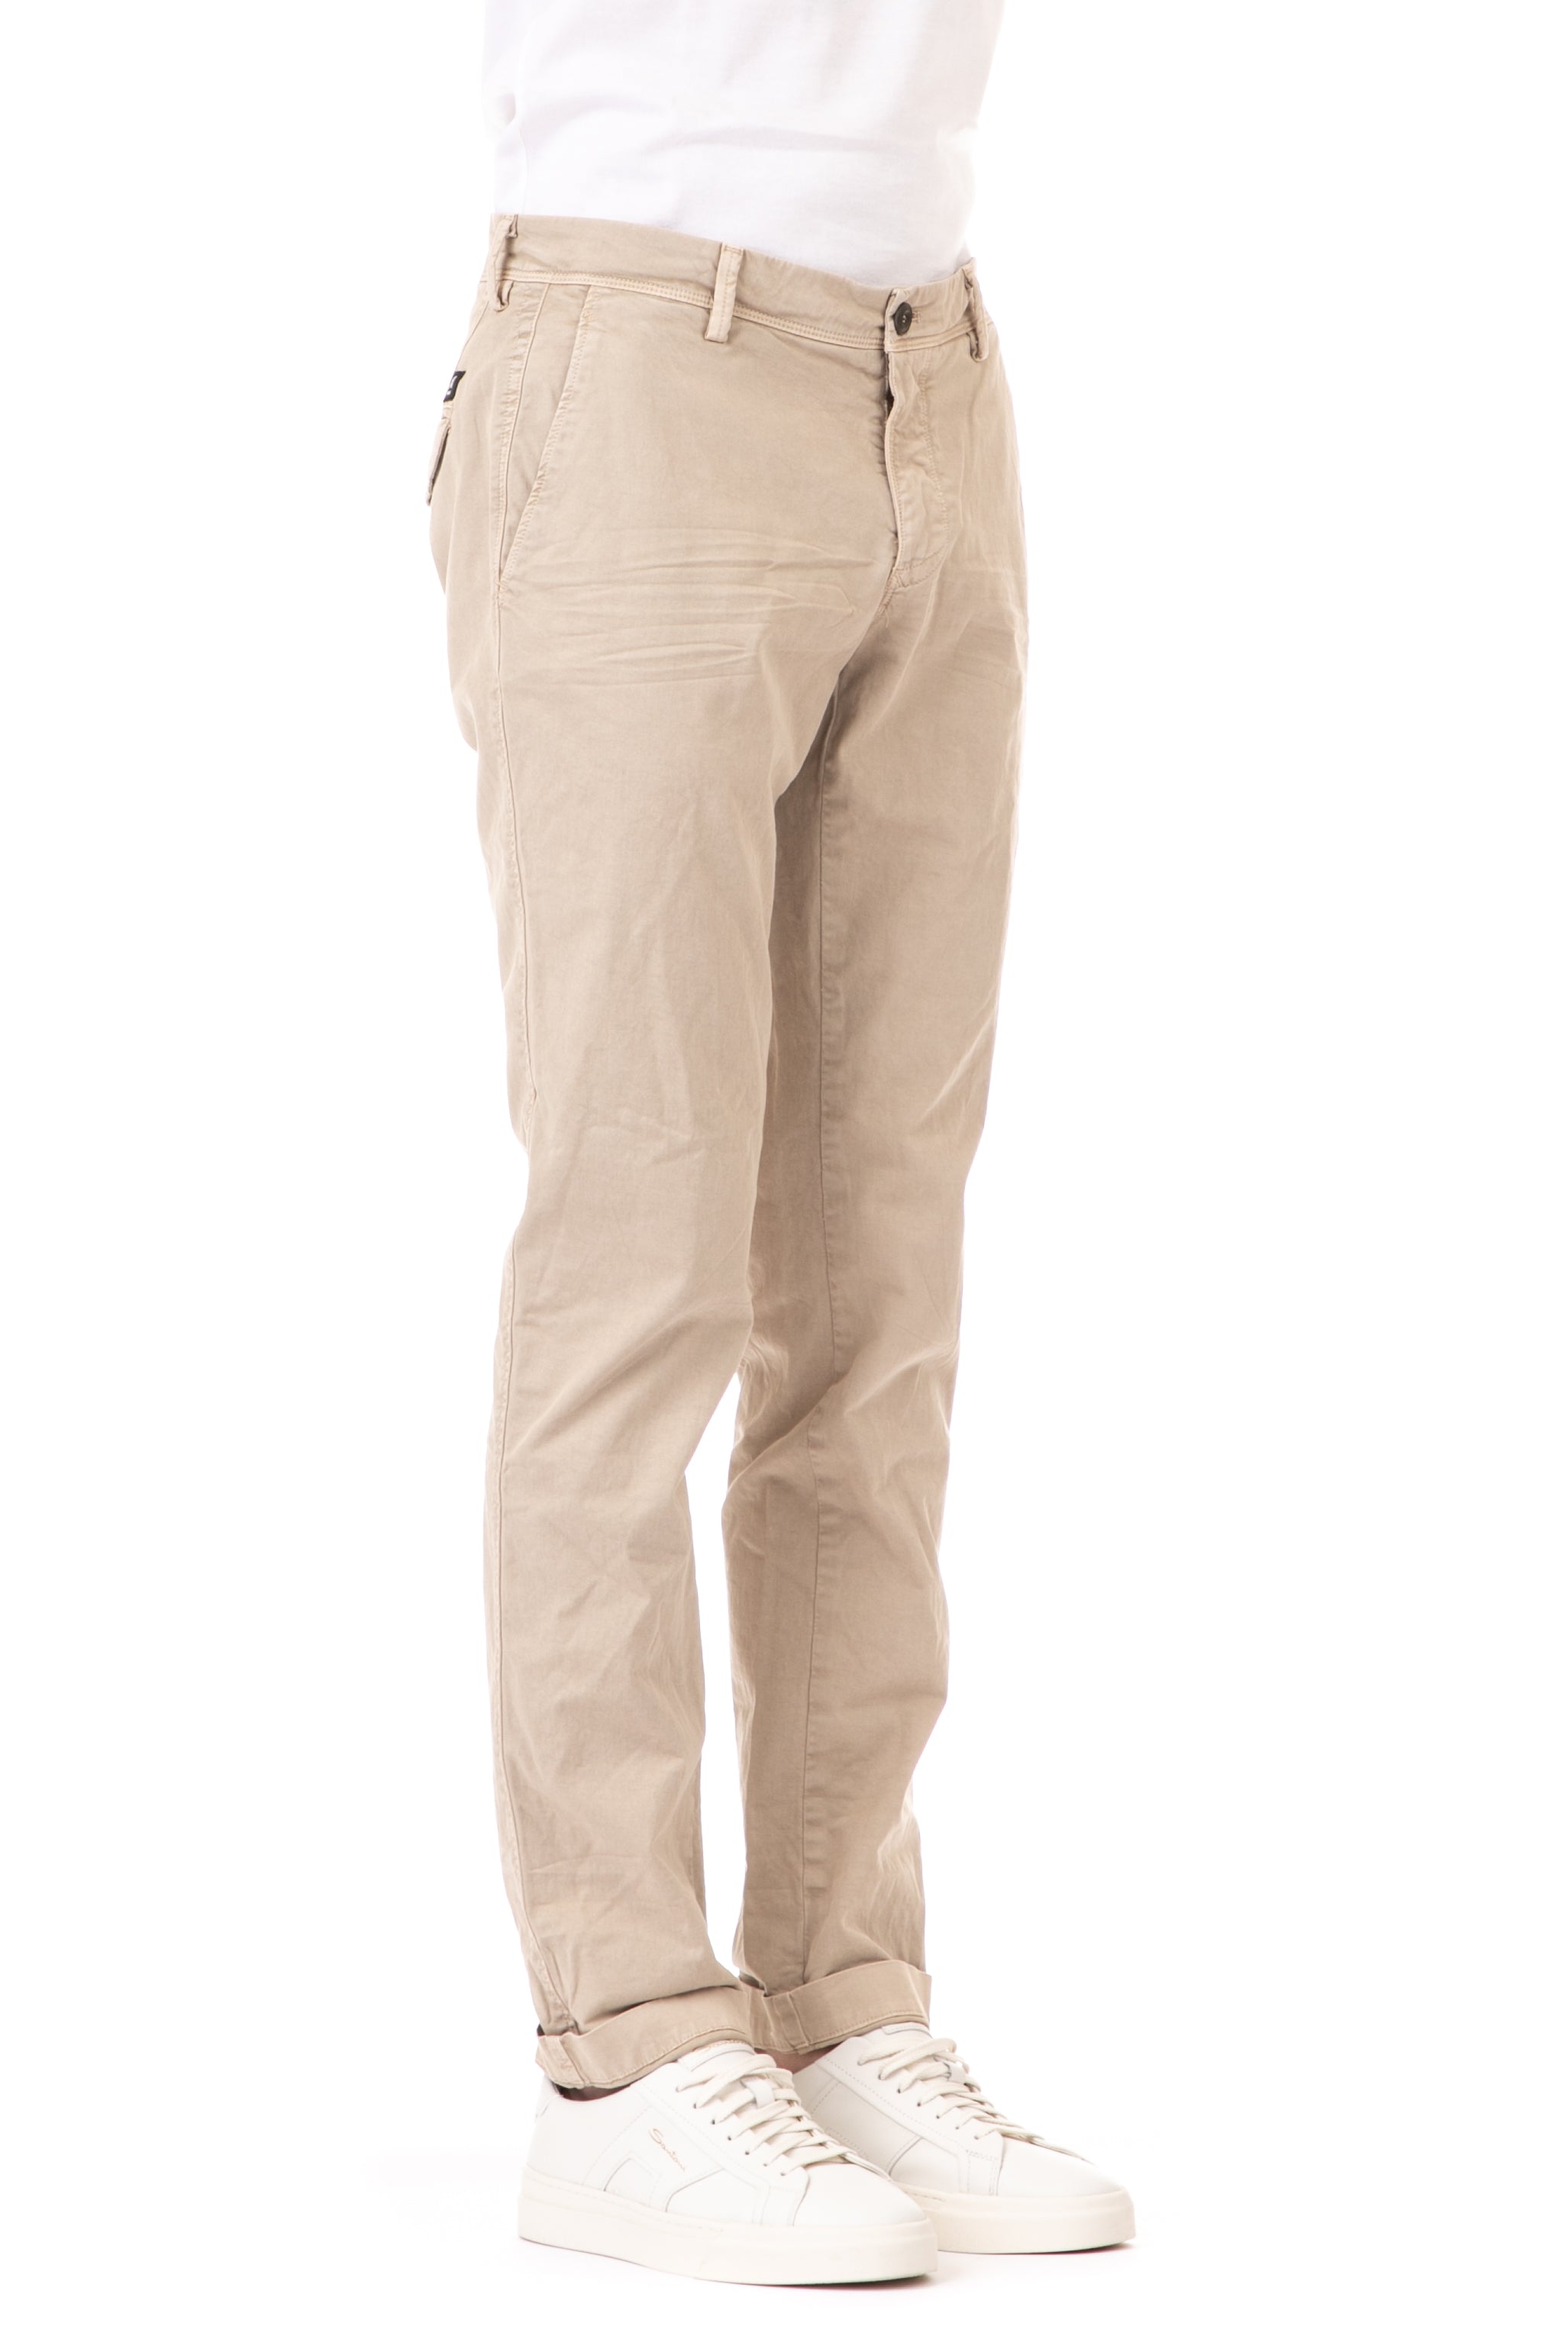 Eisenhower model cotton-lyocell trousers